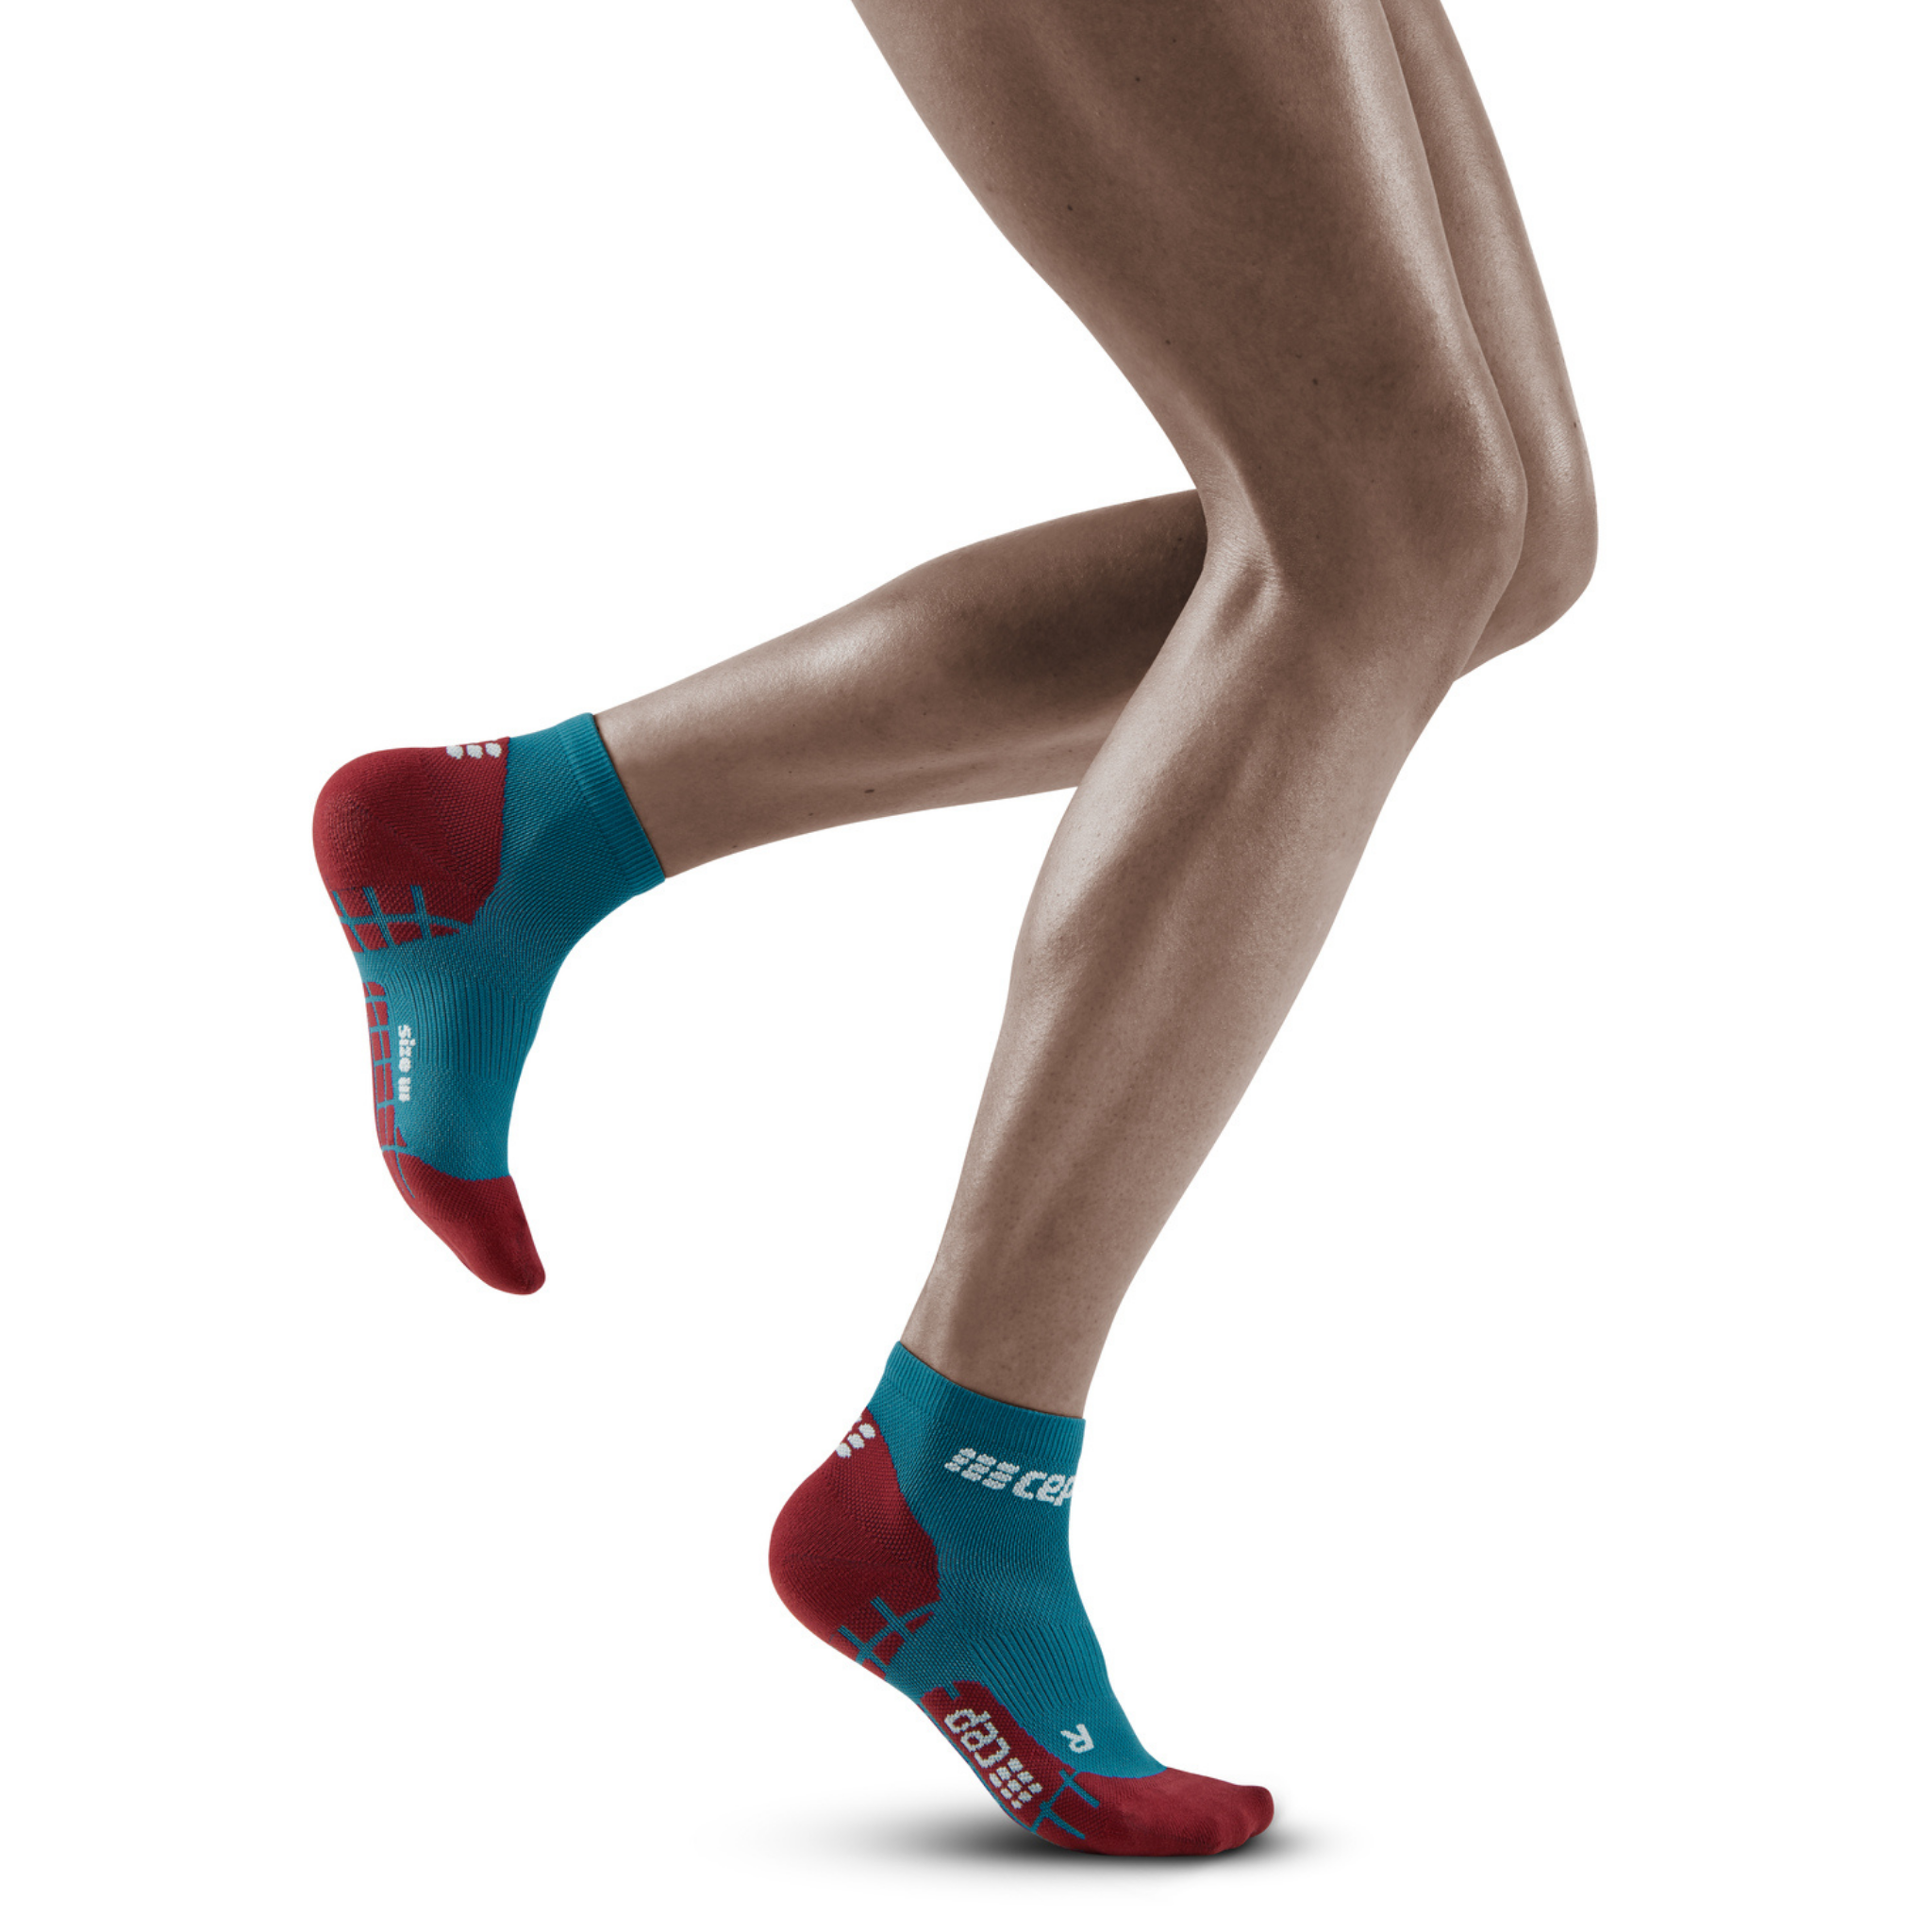 Ultralight Compression Tall Socks for Women